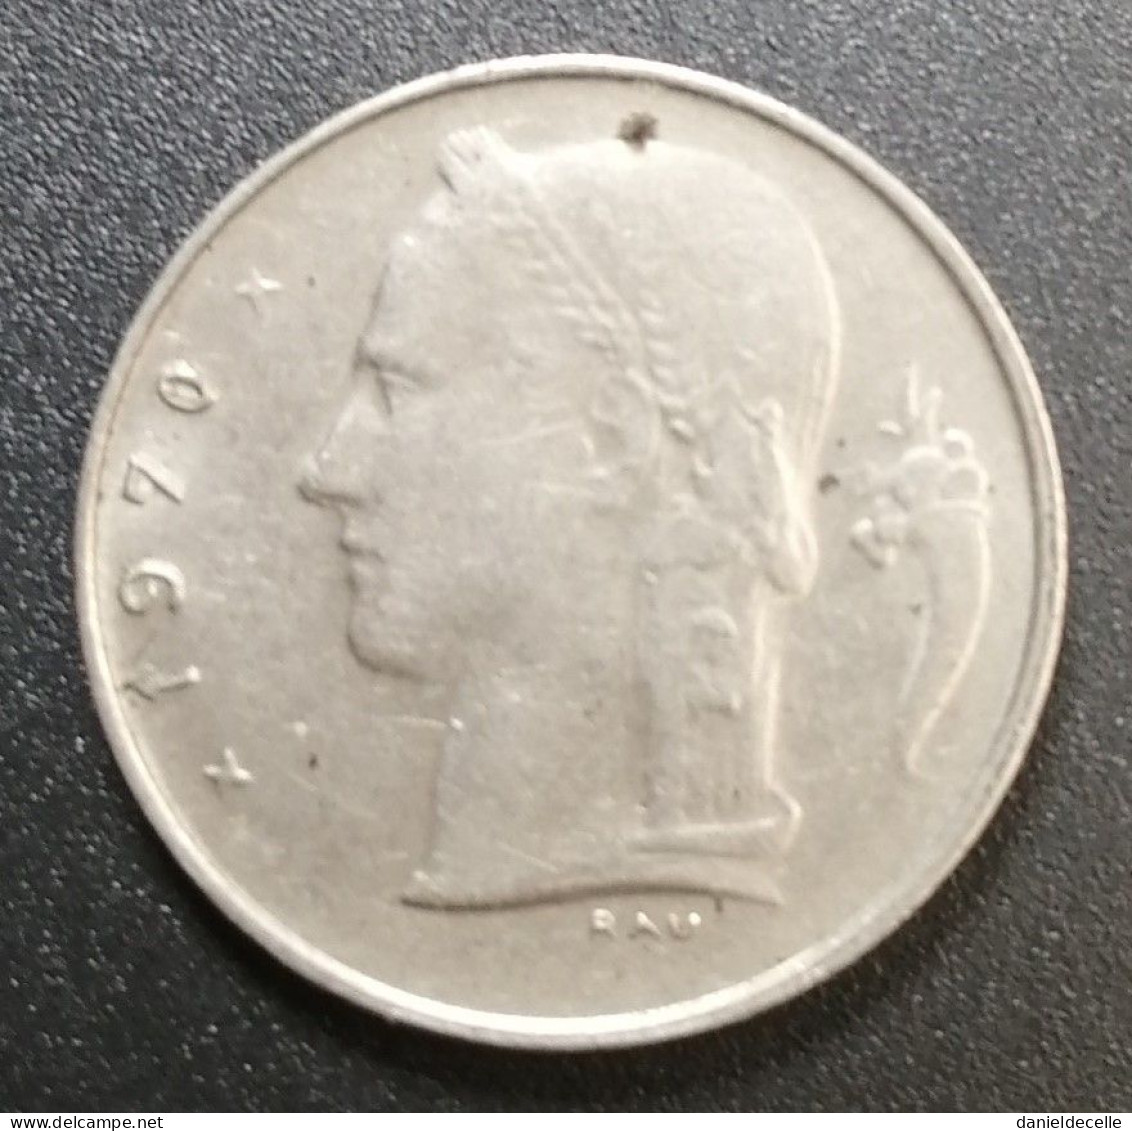 1 Franc 1970 België Date Double - 1 Franc